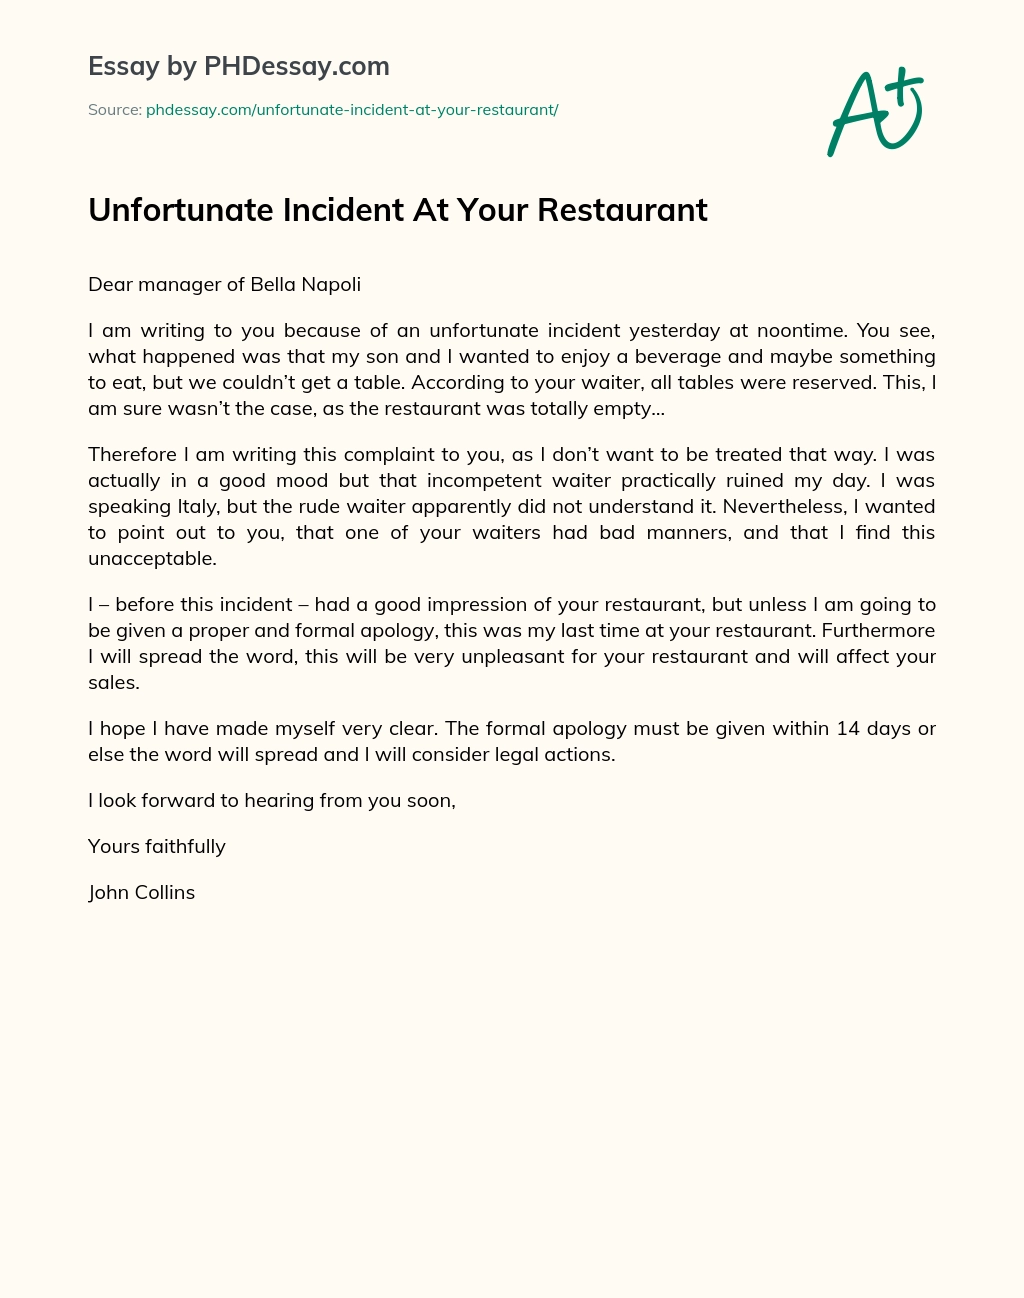 Unfortunate Incident At Your Restaurant essay